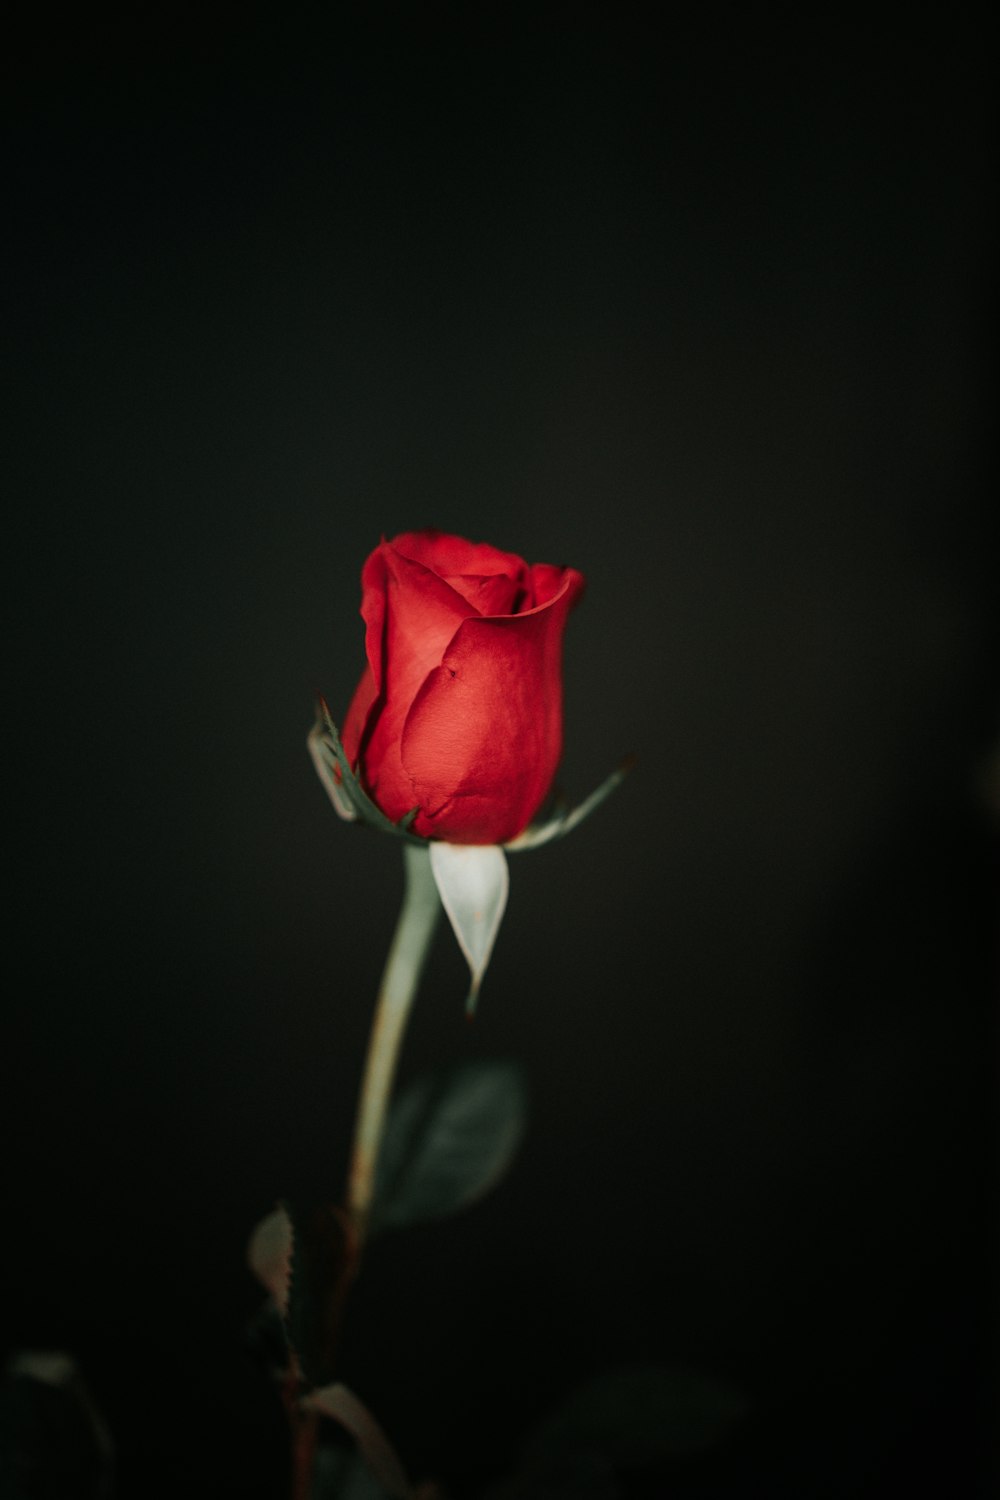 999+ Red Black Rose Pictures | Download Free Images on Unsplash